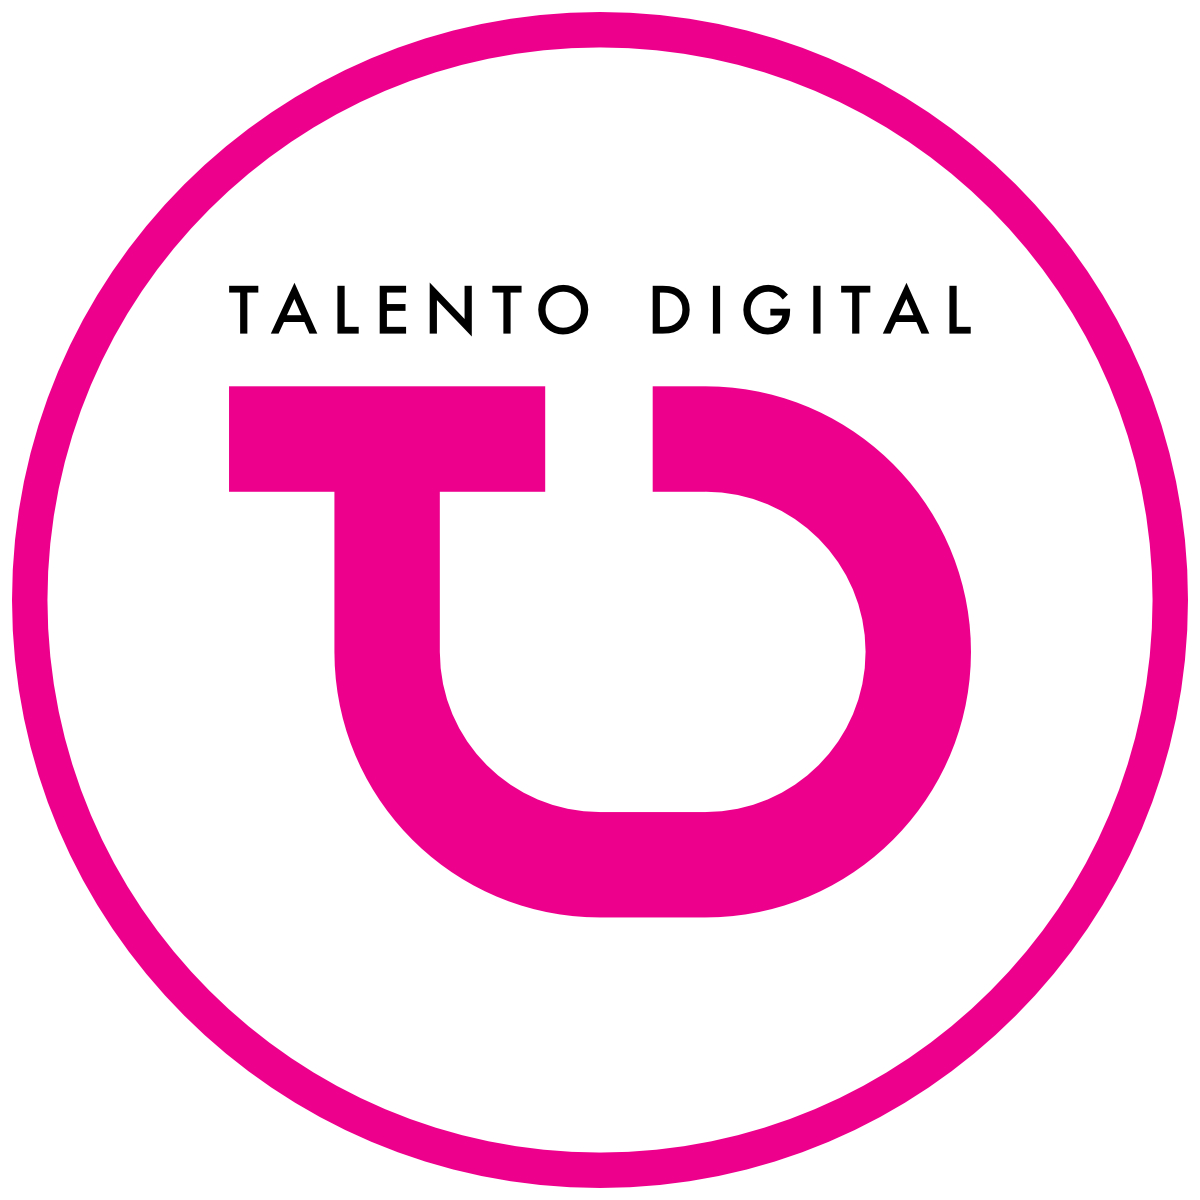 A profile image of Talento Digital